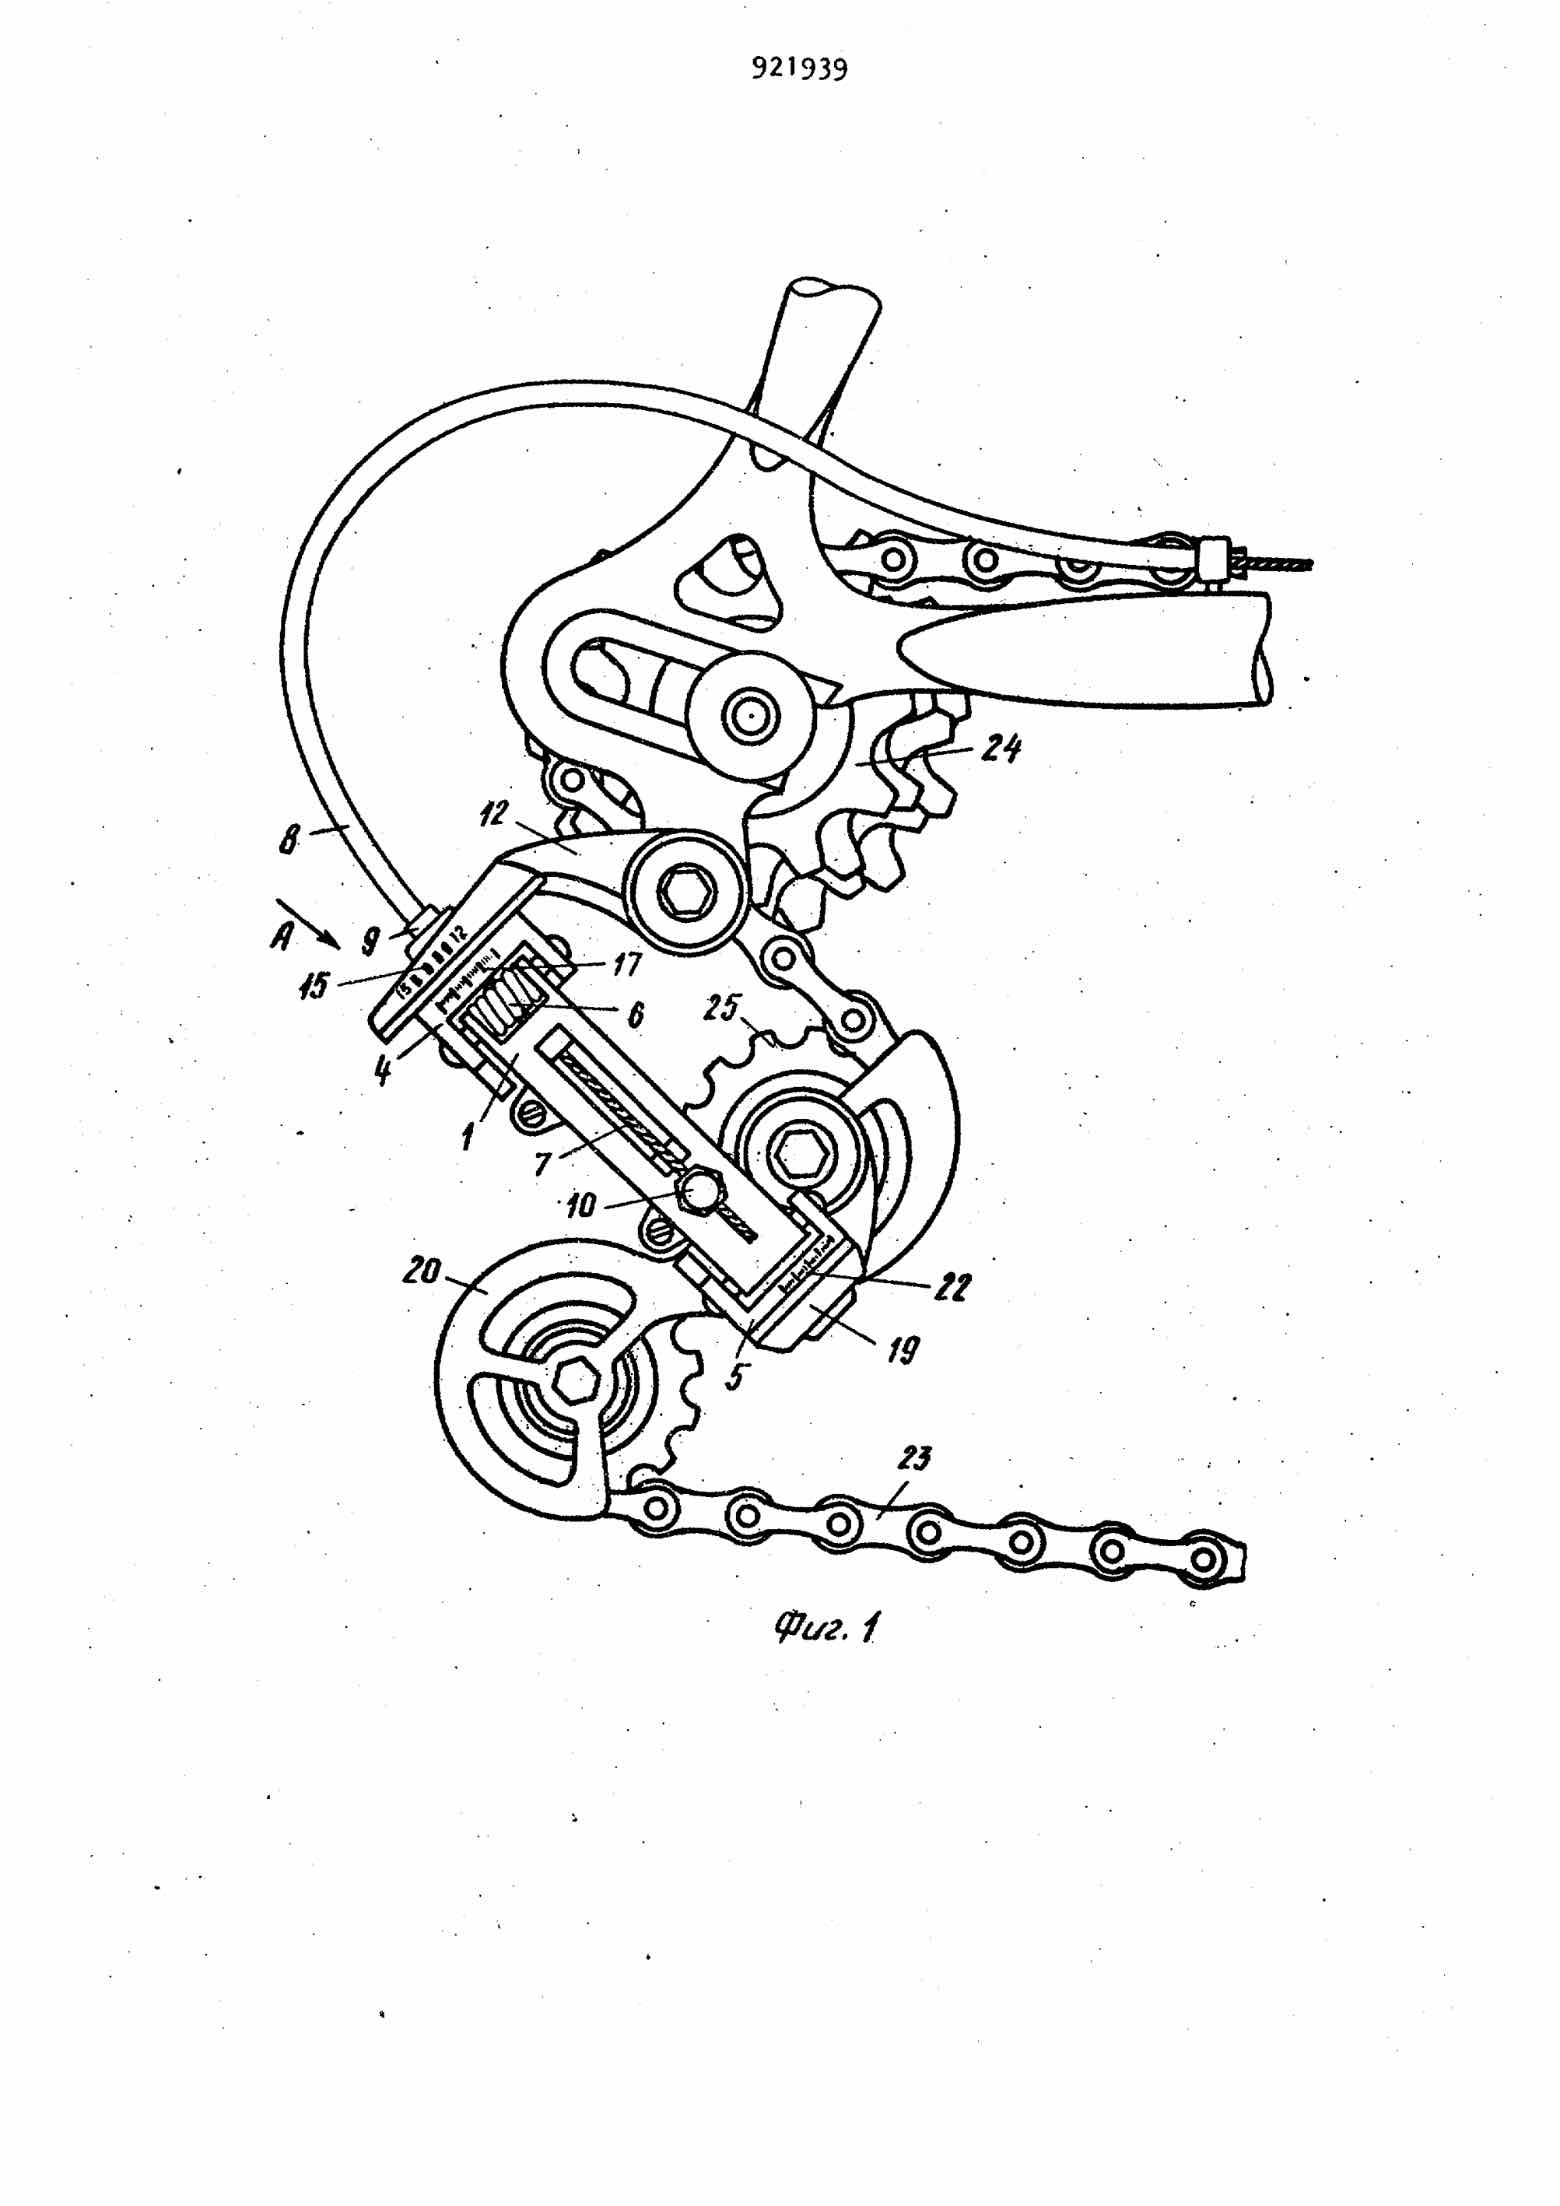 USSR Patent 921,939 - unknown derailleur scan 4 main image